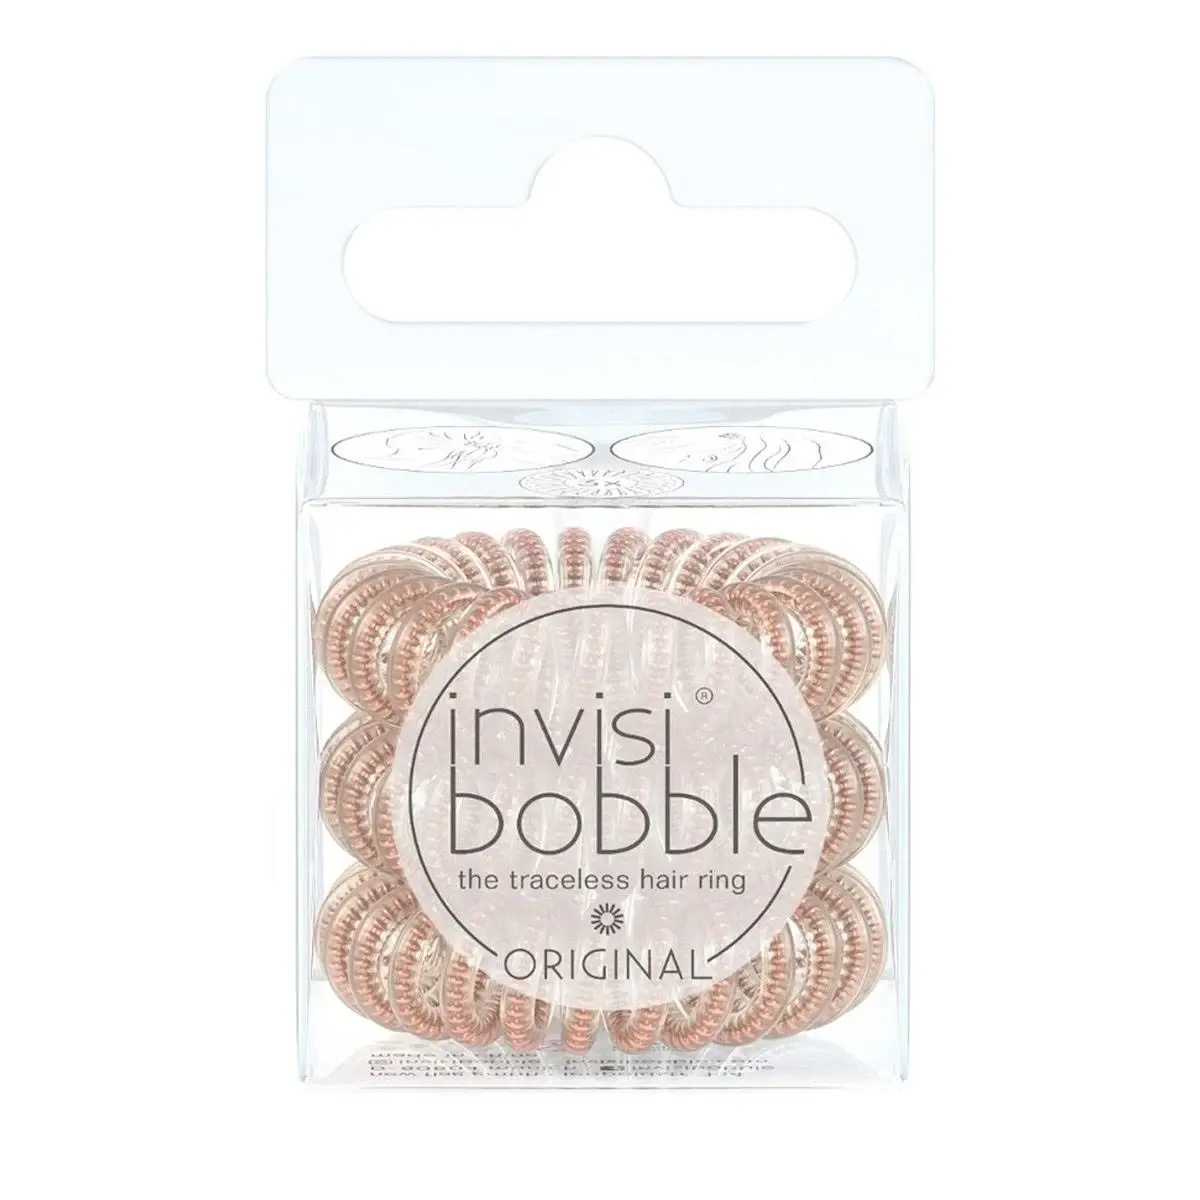 Invisibobble - Original - of Bronze and Beads